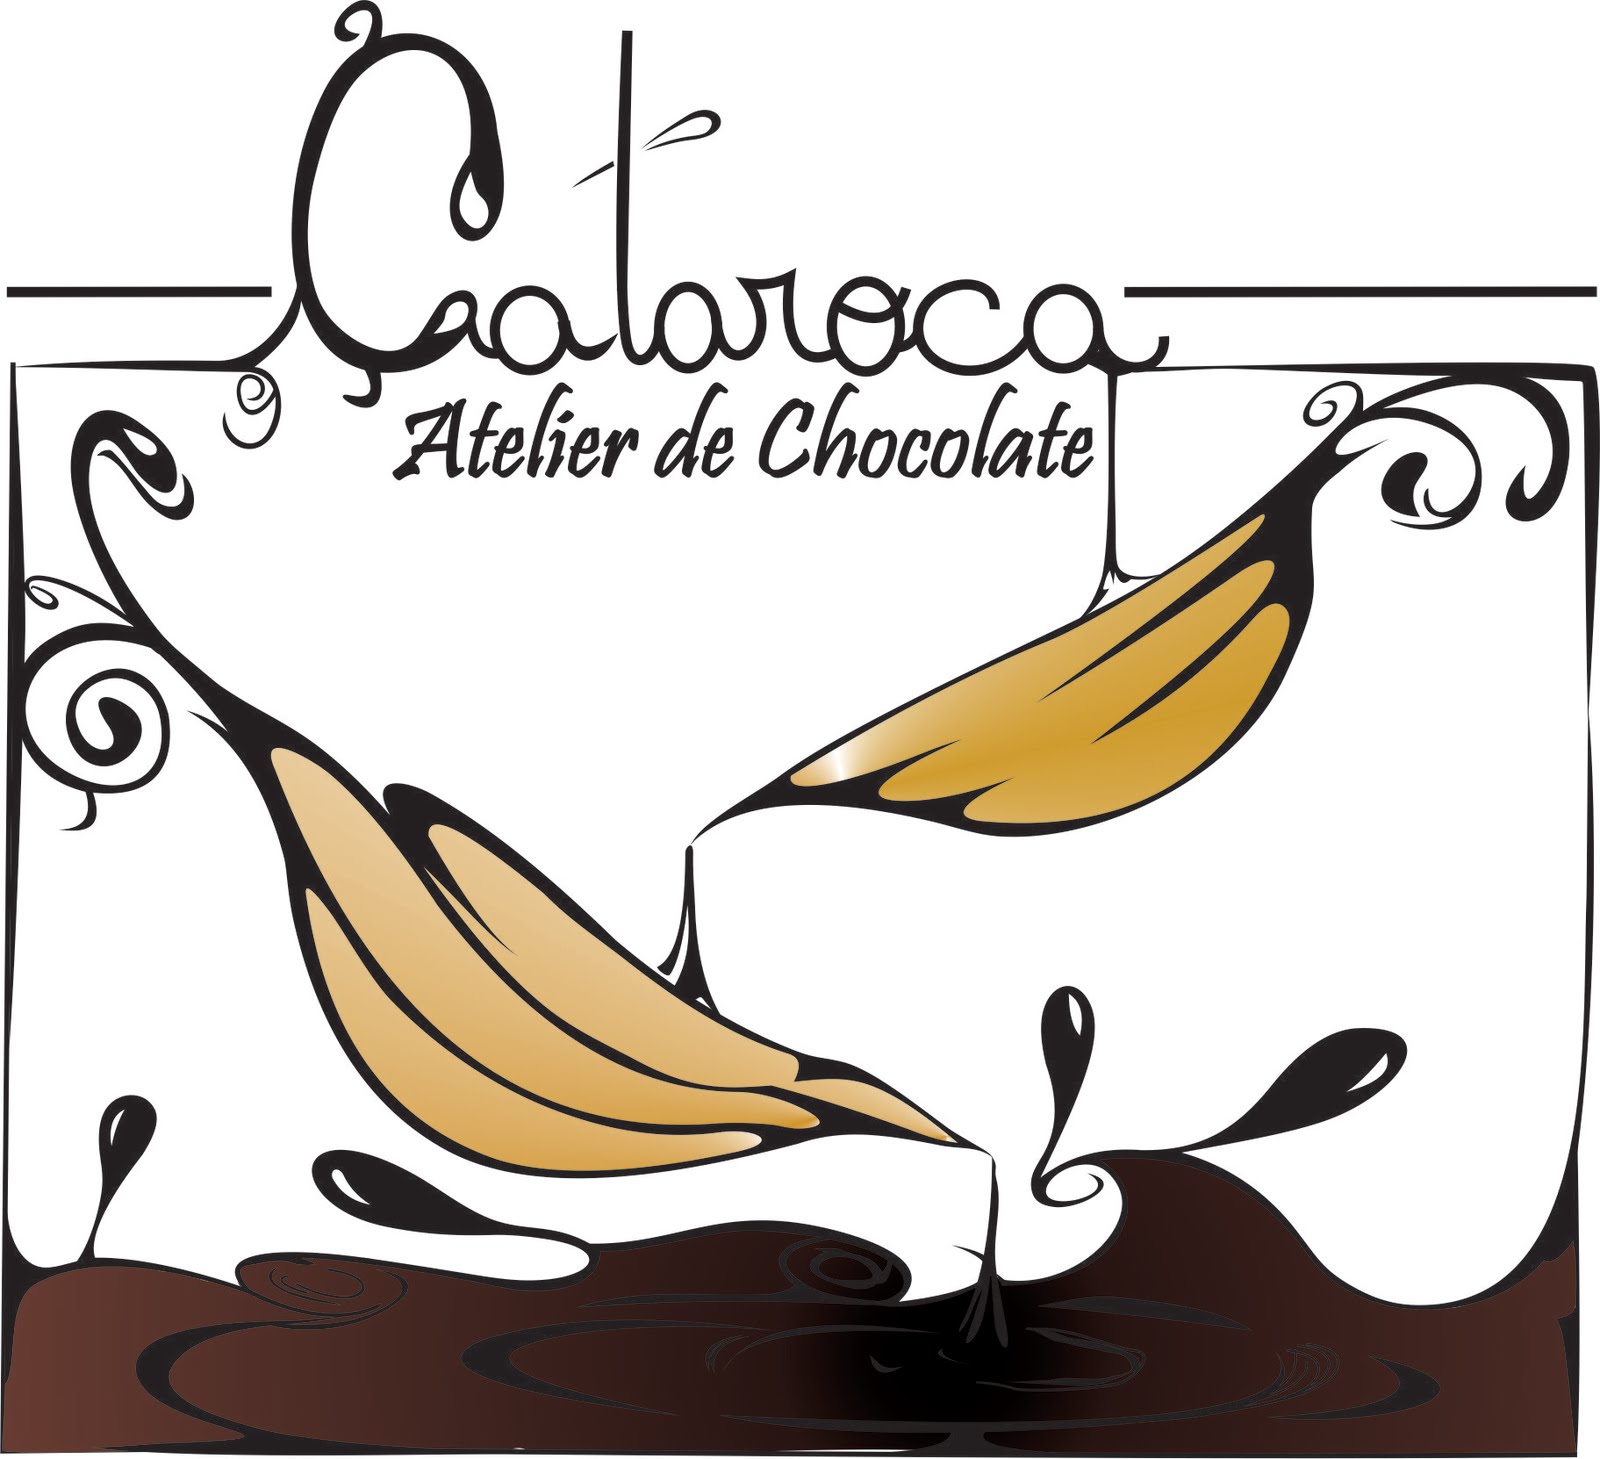 Cataroca  Atelier de Chocolates